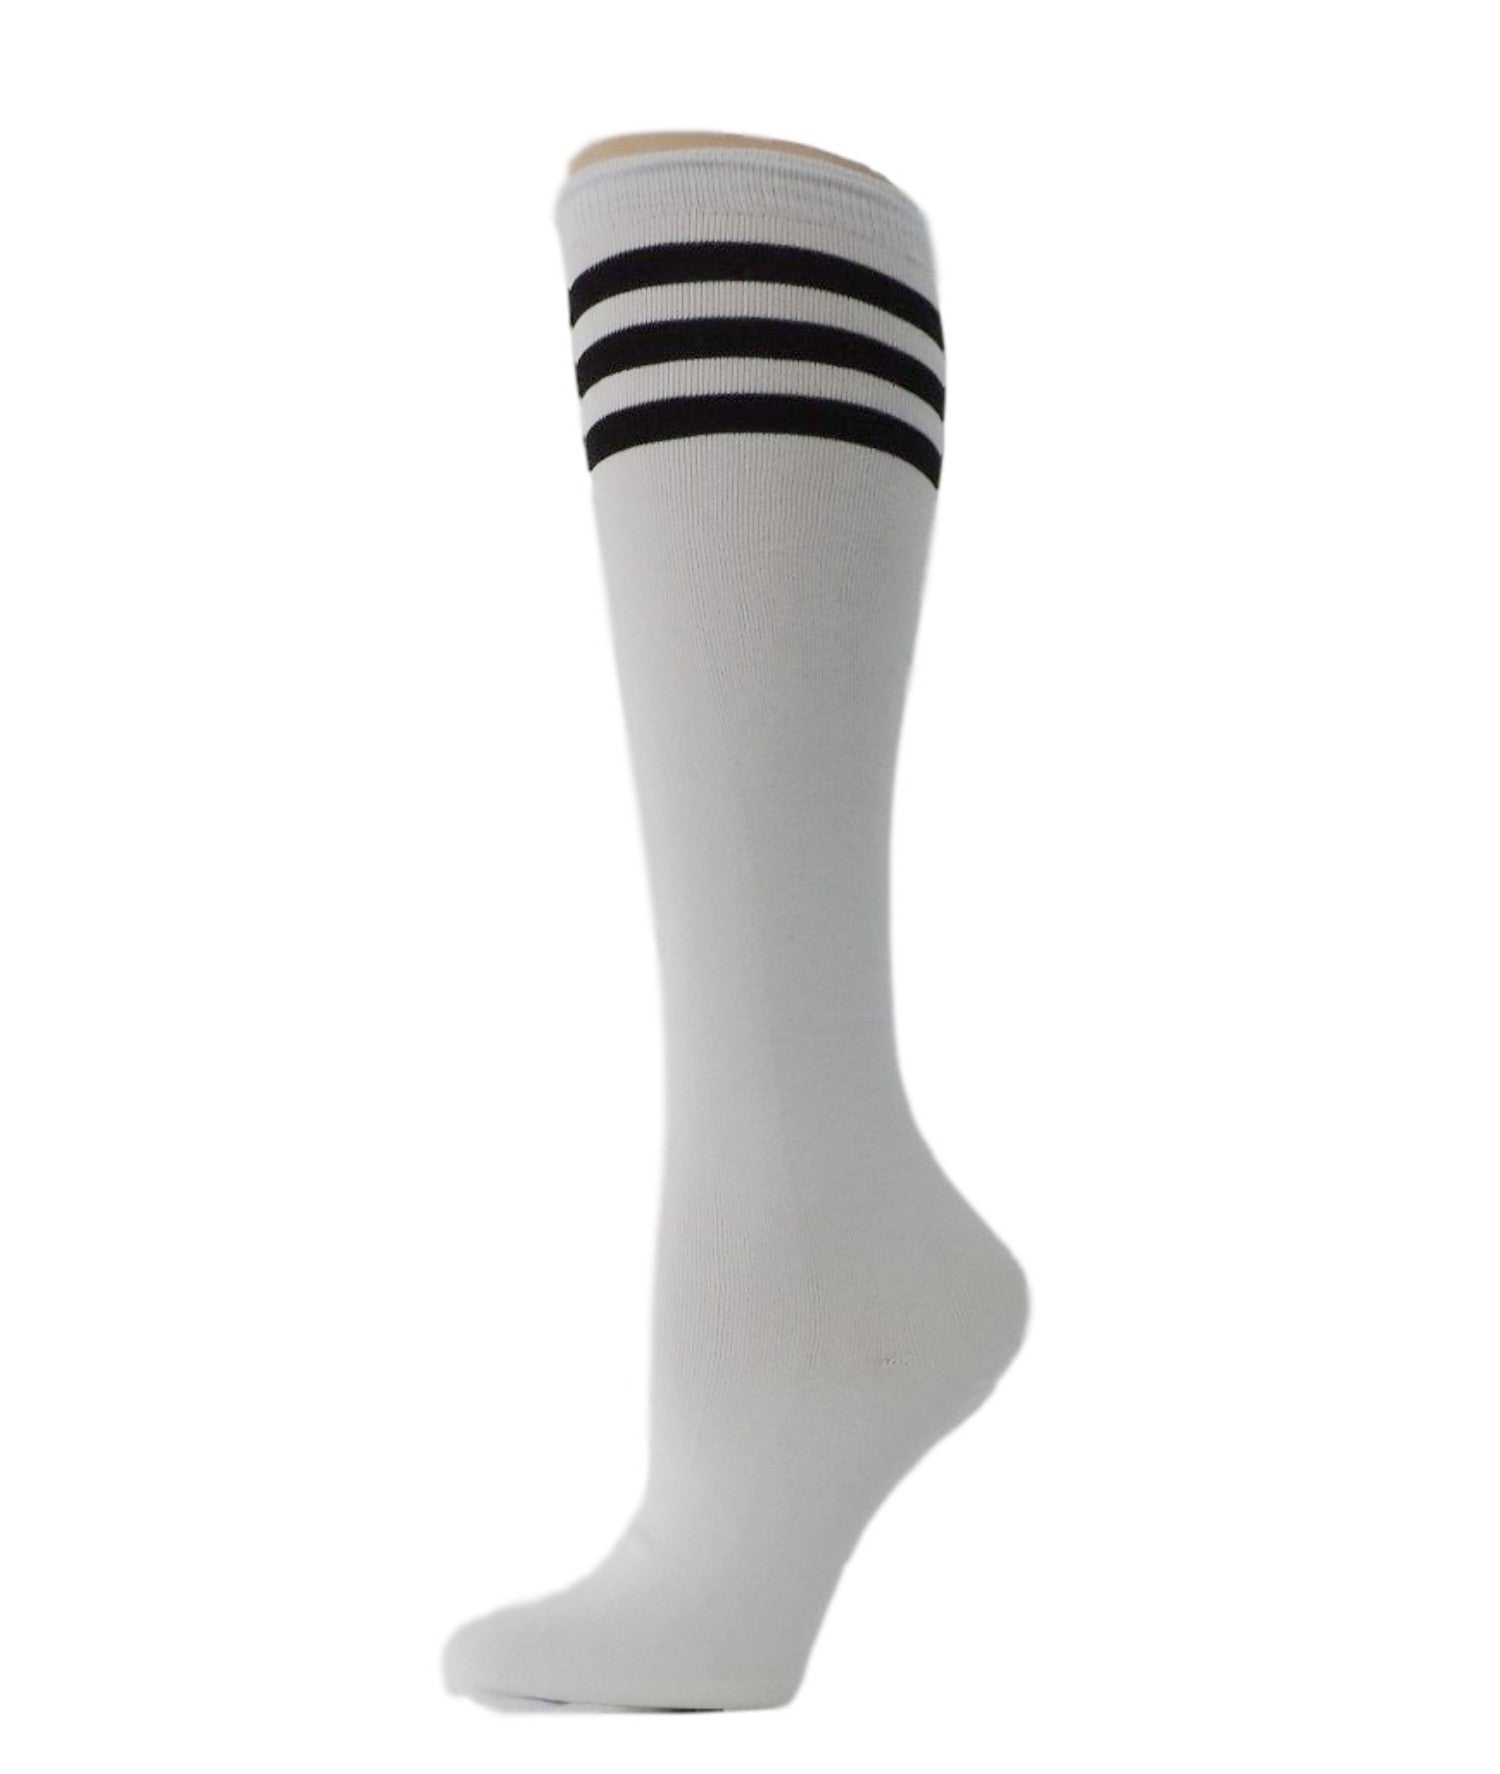 Black Striped Knee High Socks